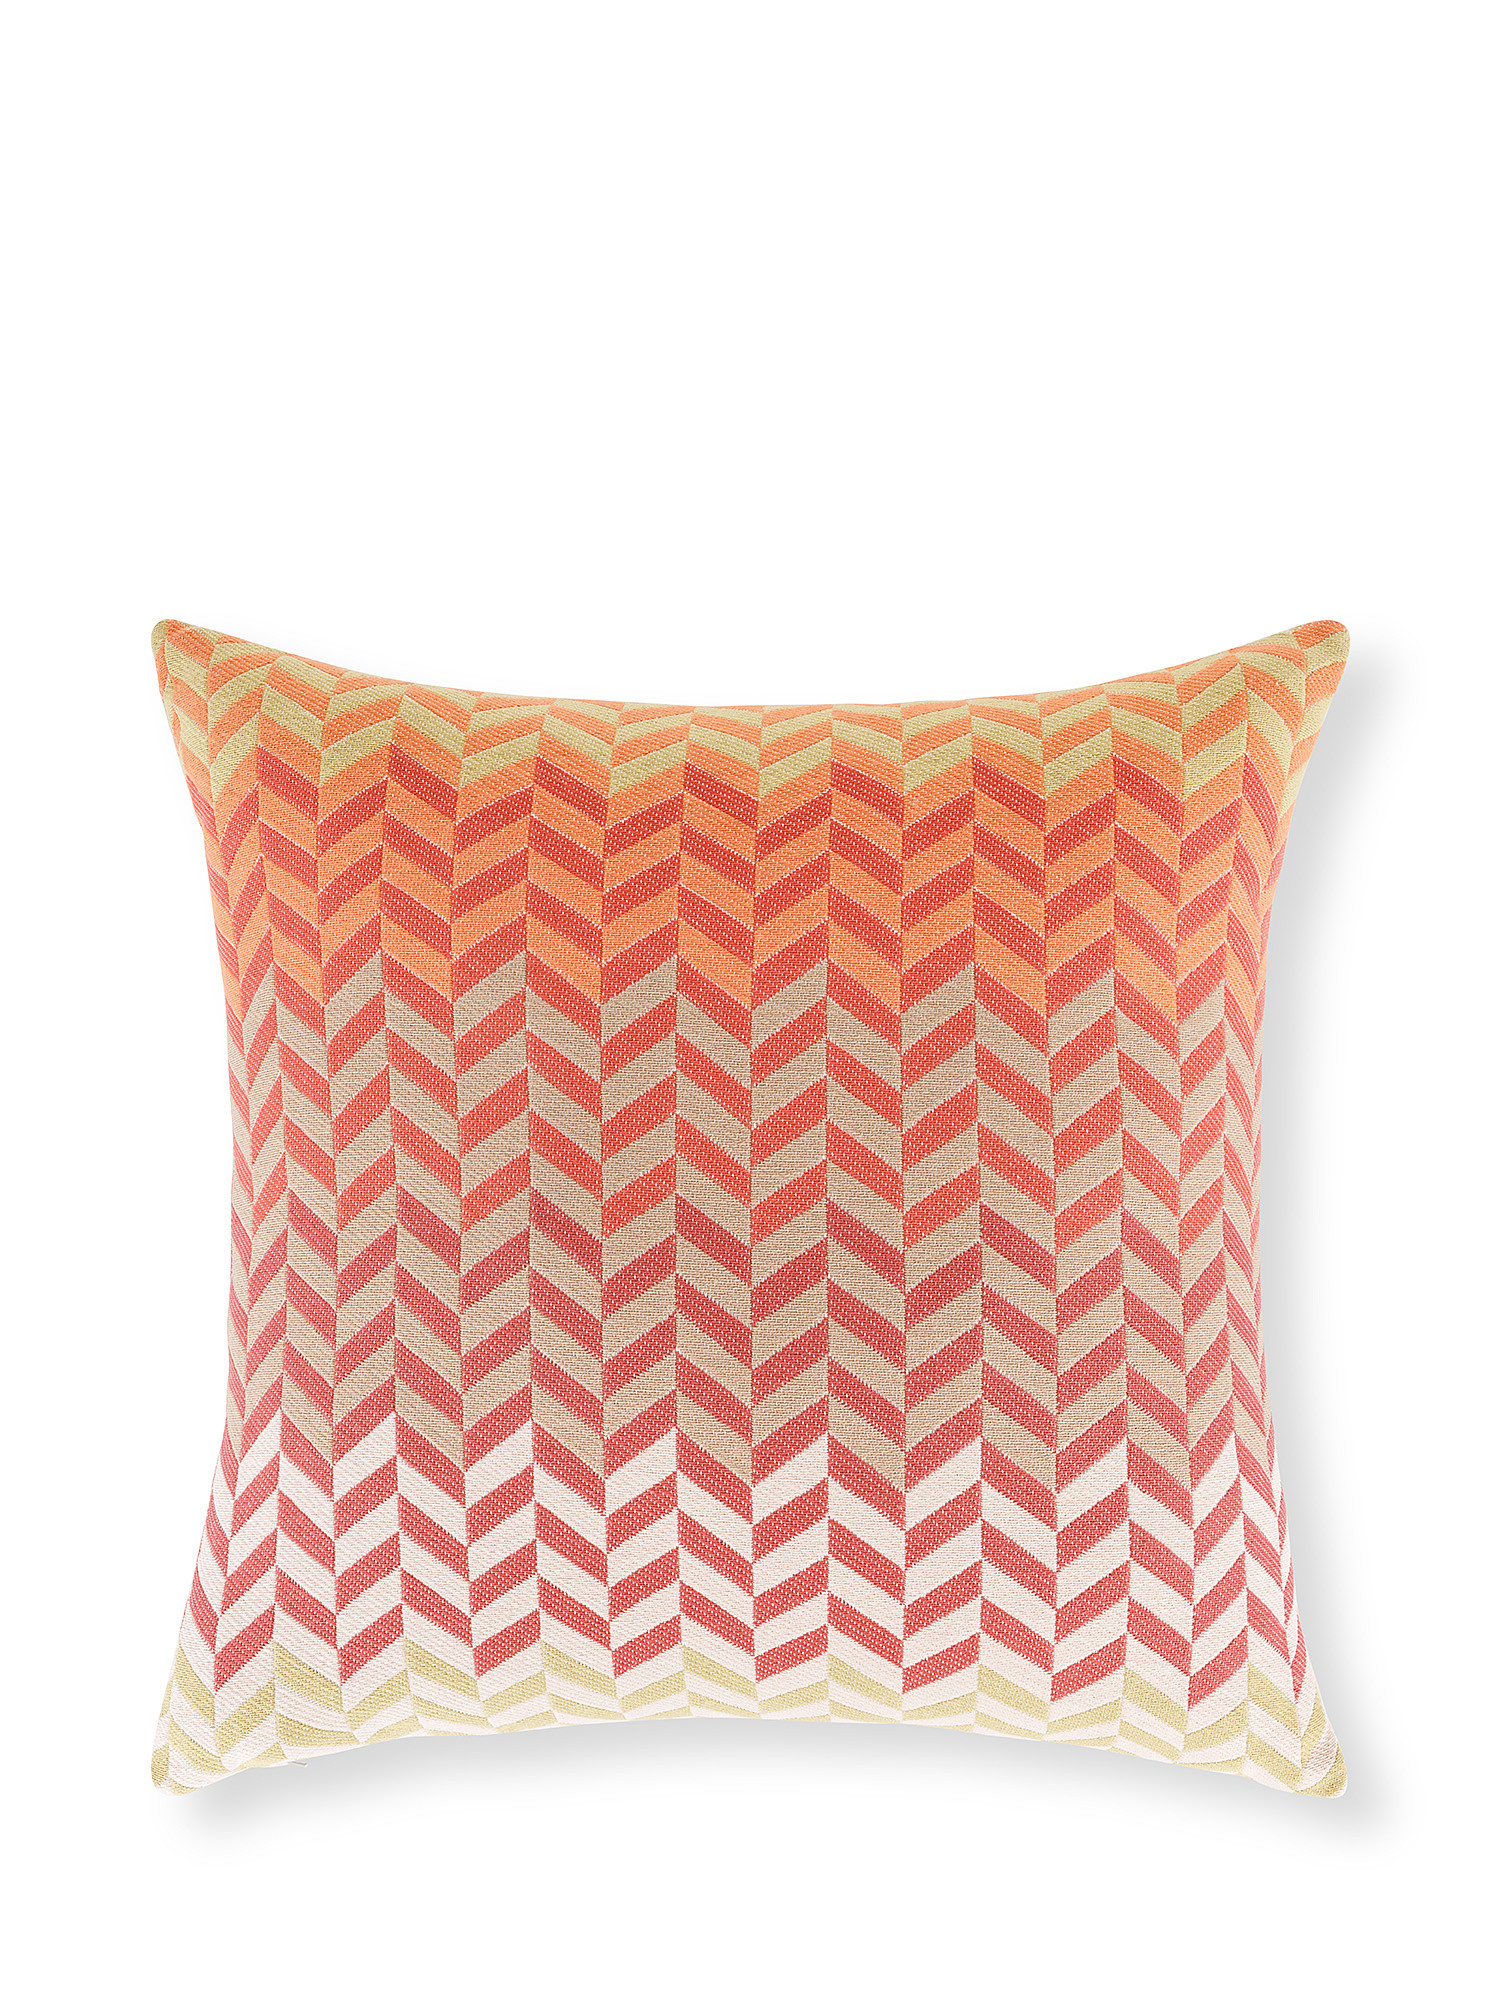 Geometric jacquard cushion 50x50cm, Pink, large image number 0